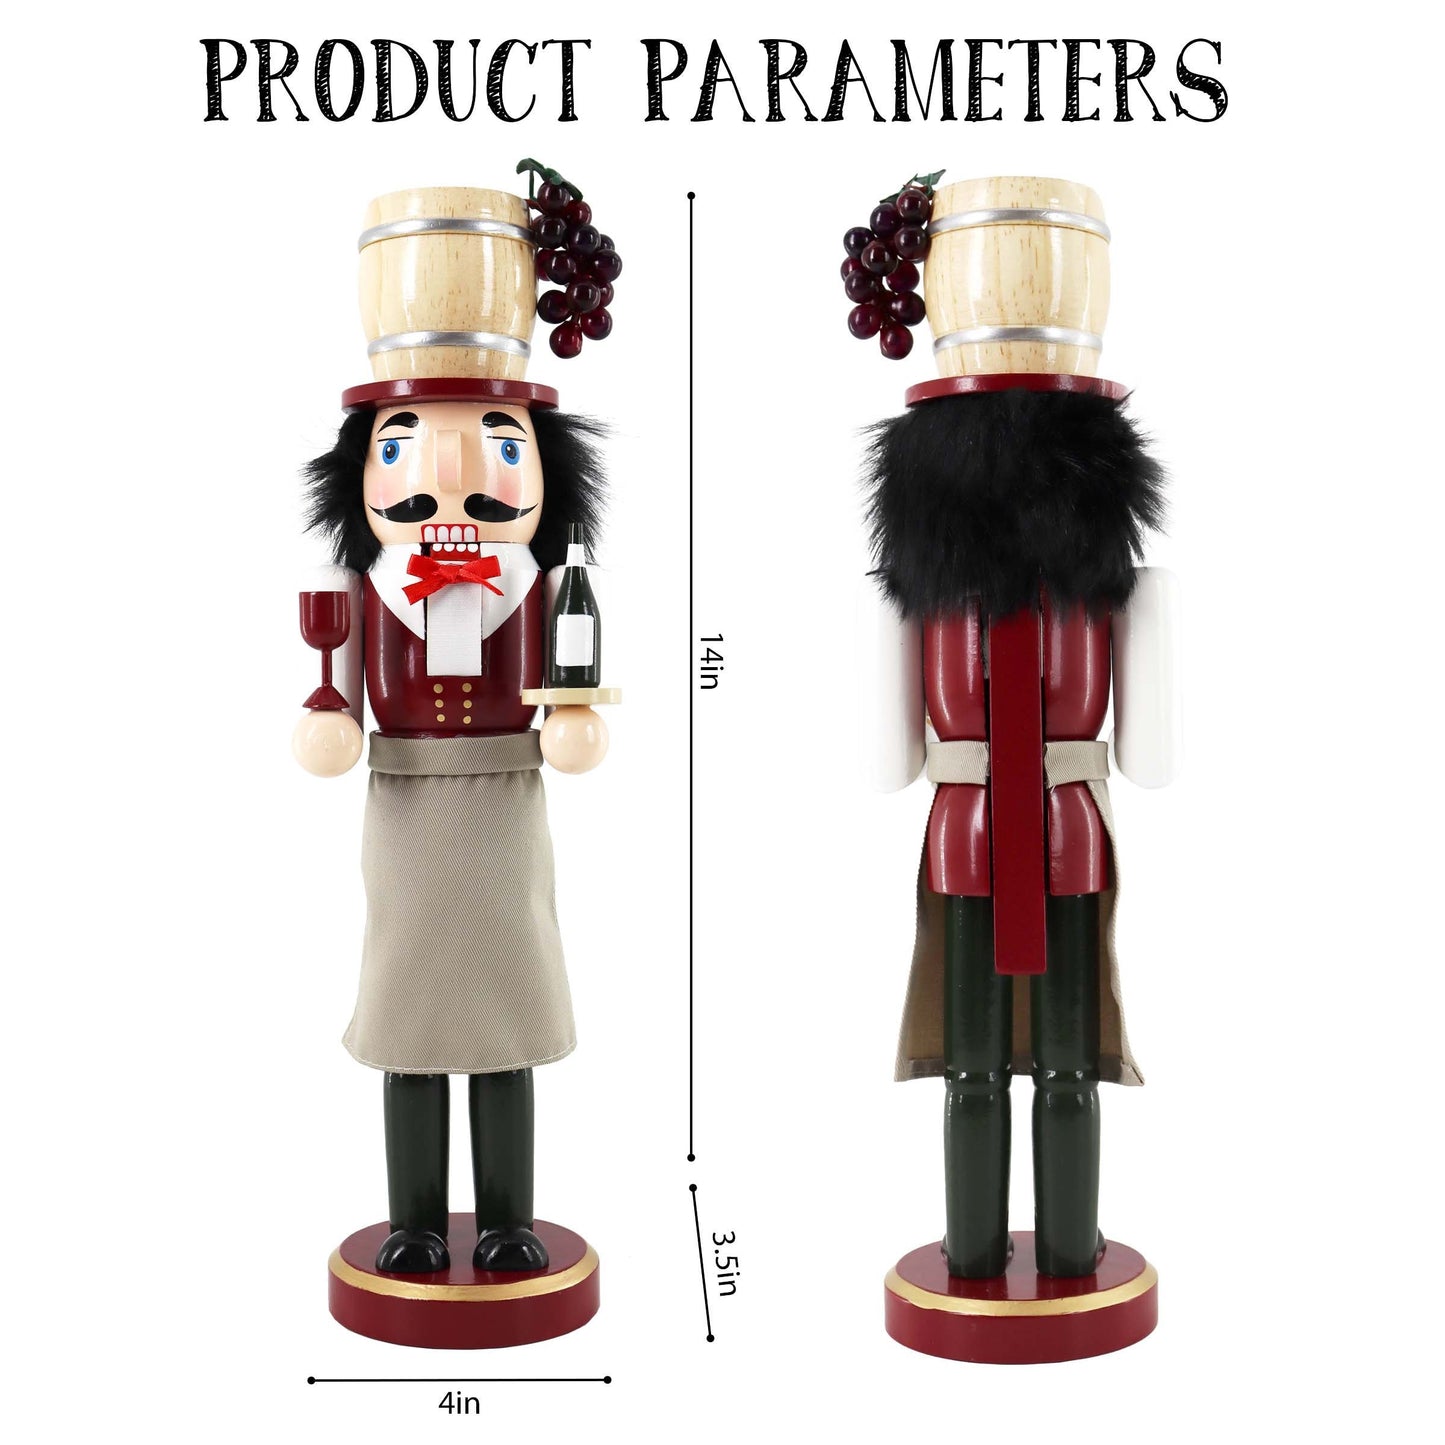 14-inch Wooden Nutcrackers Christmas Decoration Figures (Wine Server)